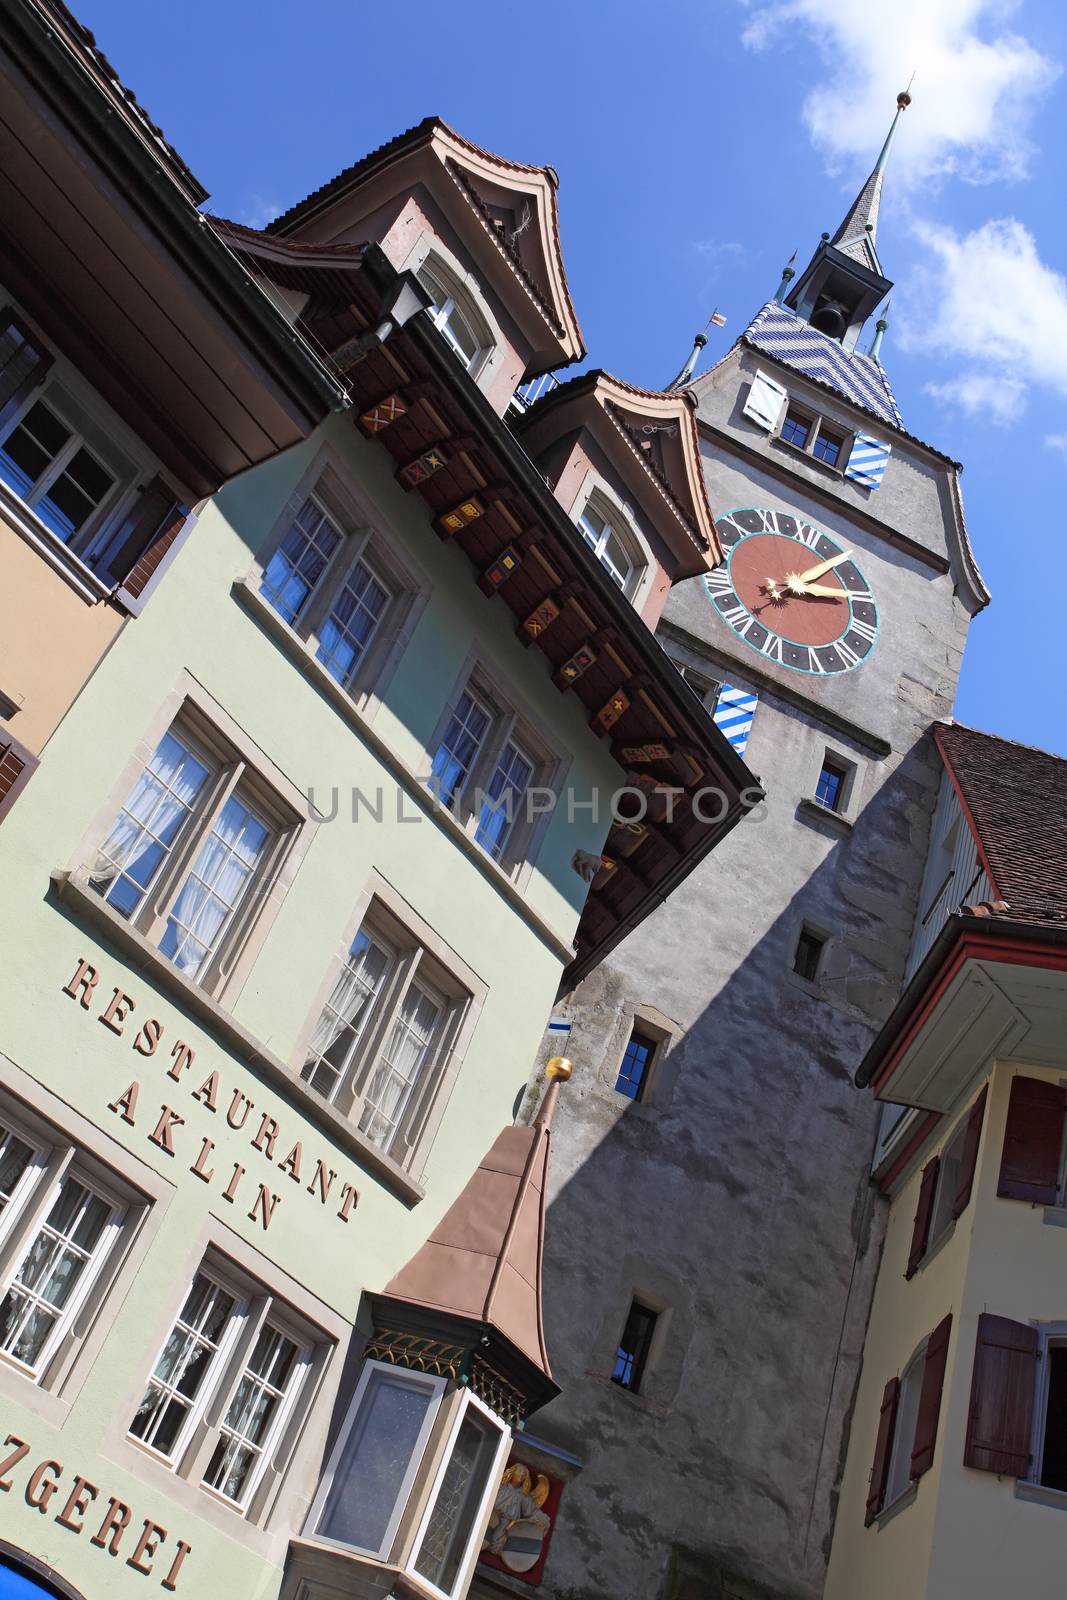 Zytturm clocktower in the city of Zug in Switzerland. Photo taken May 3, 2012.